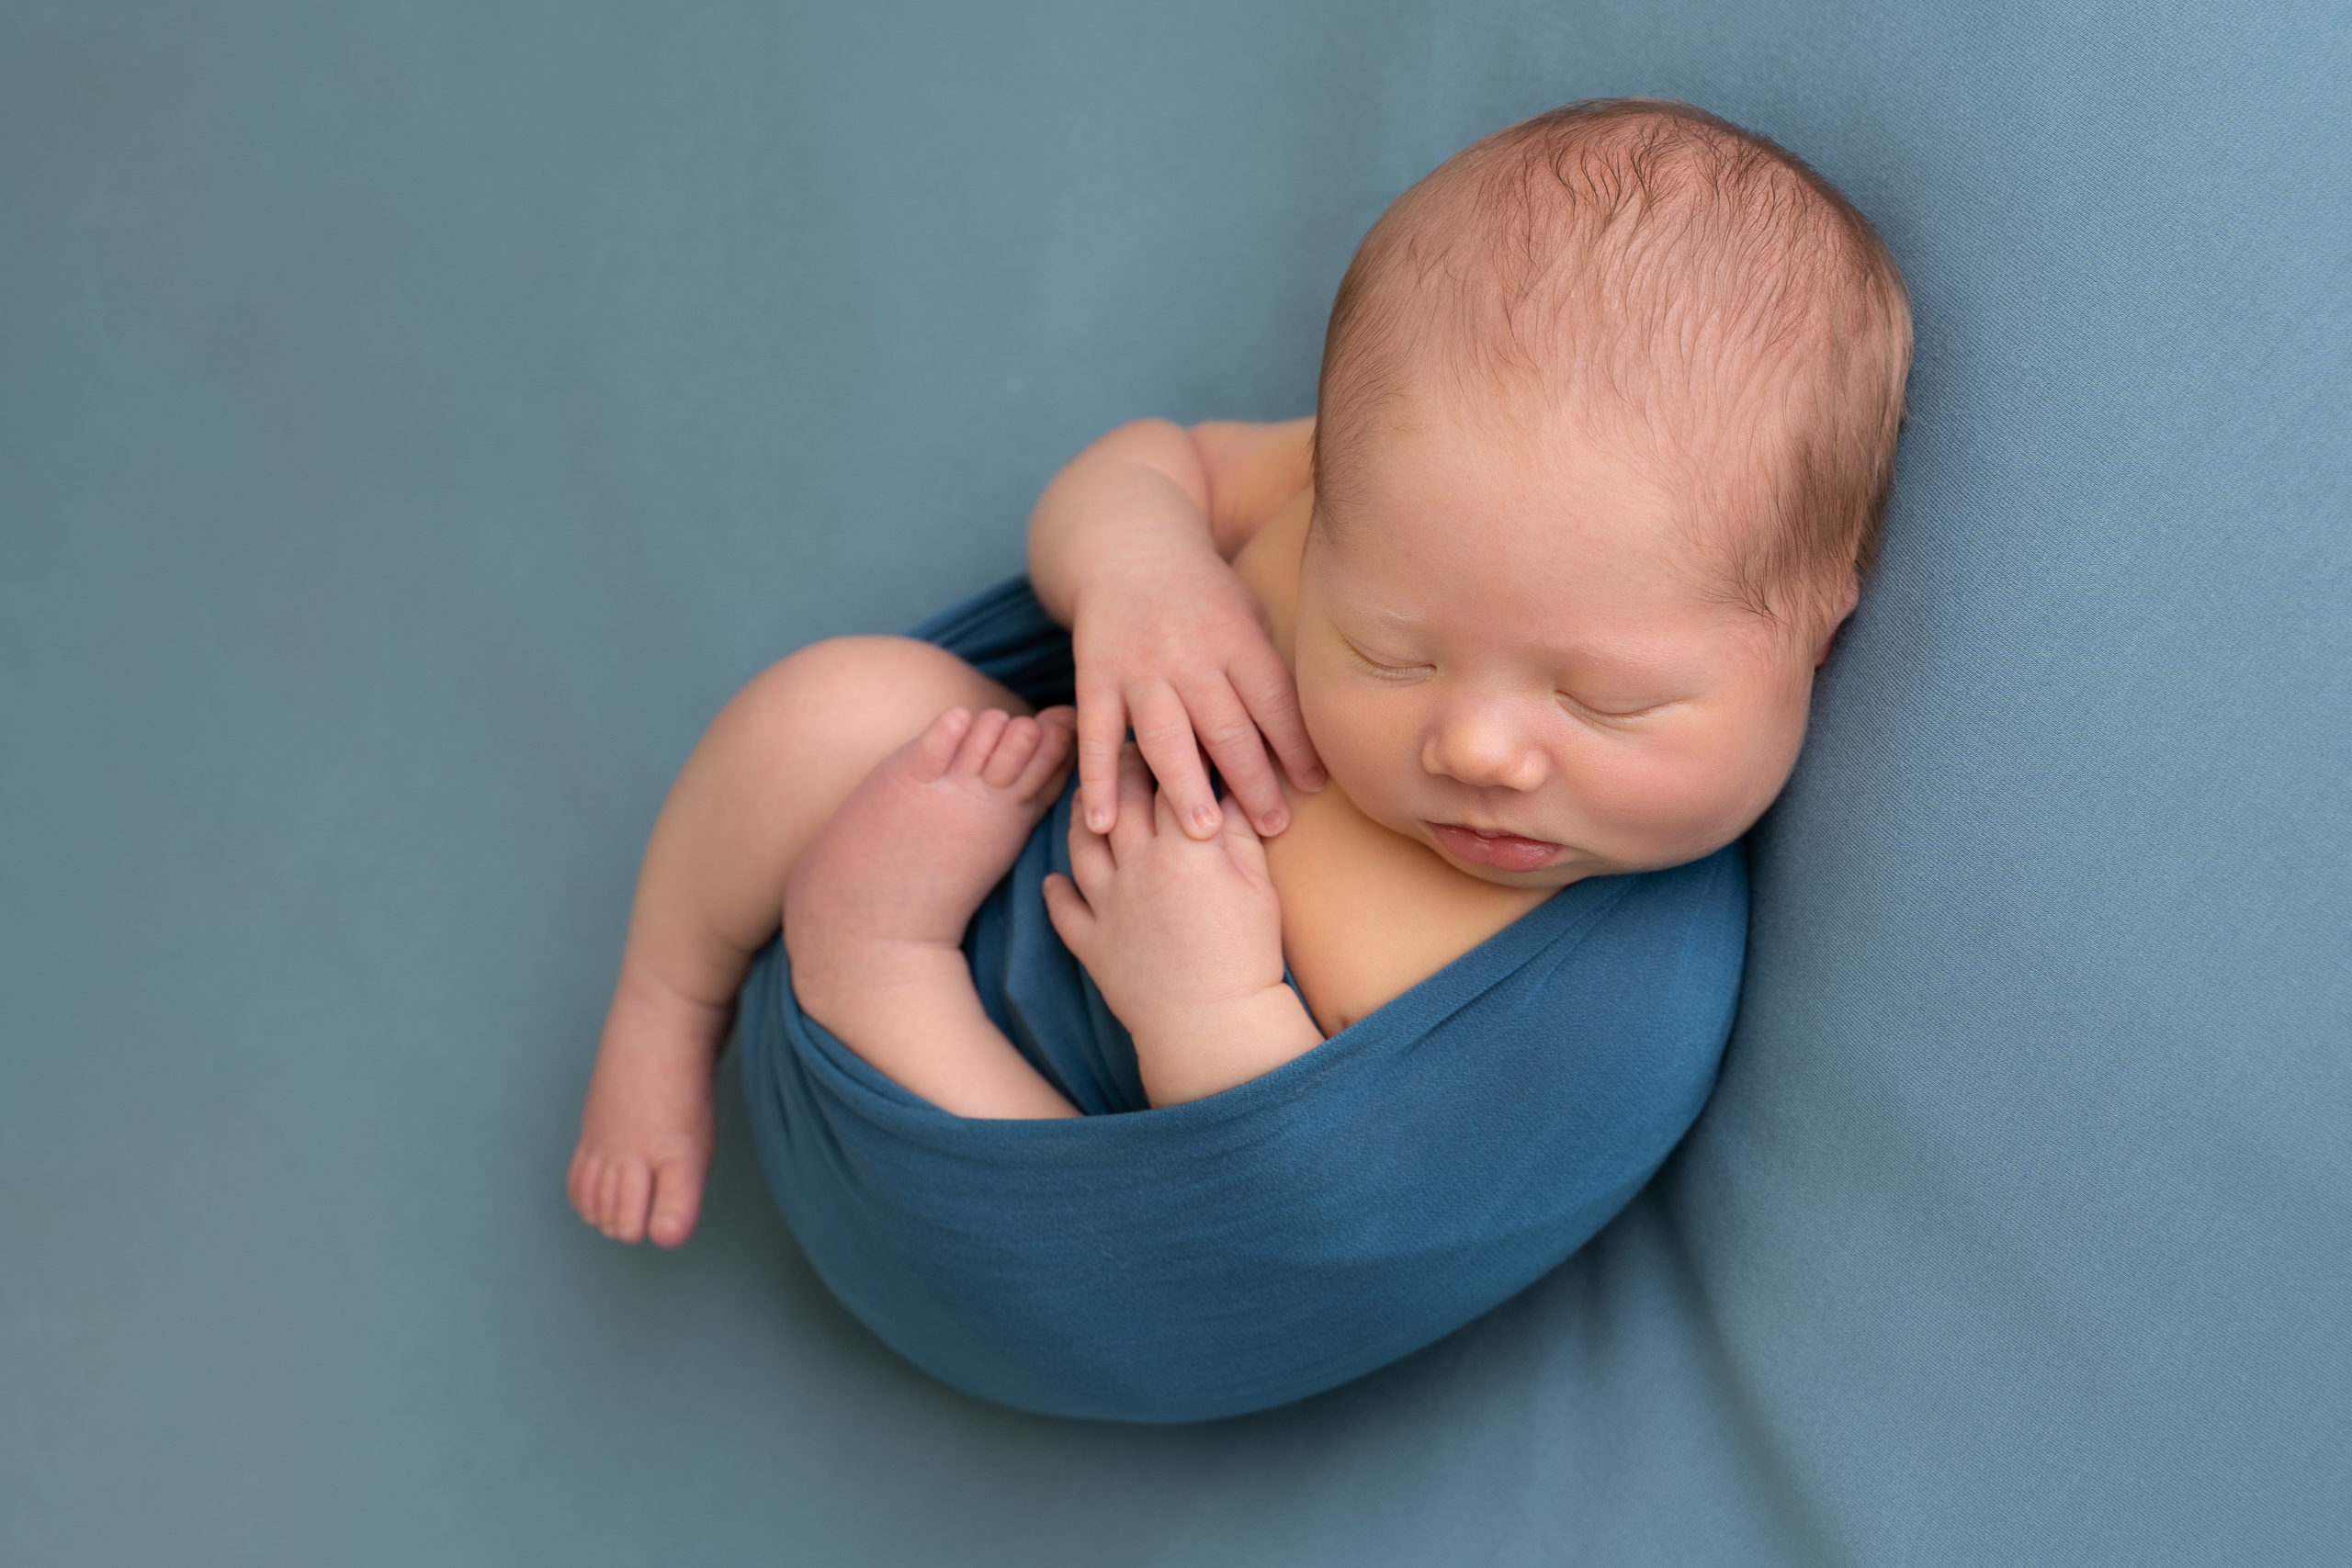 professional newborn photo of newborn baby posed on teal blanket by newborn photographer edinburgh beautiful bairns